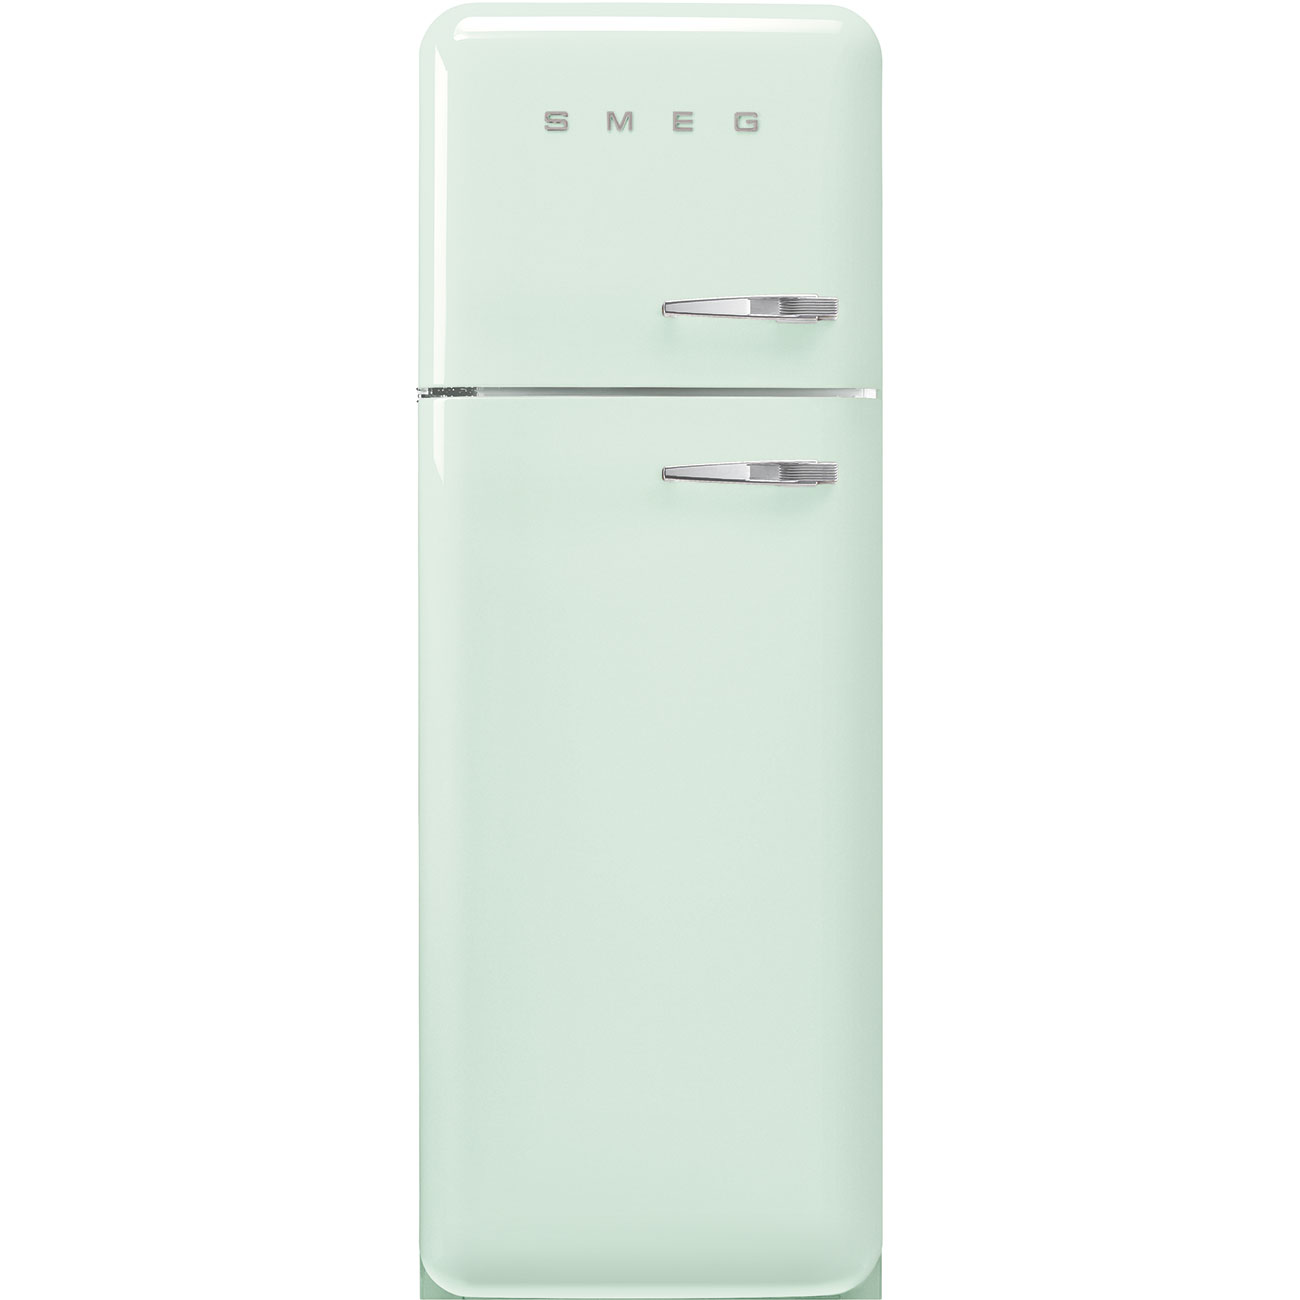 Pastel green refrigerator - Smeg_1